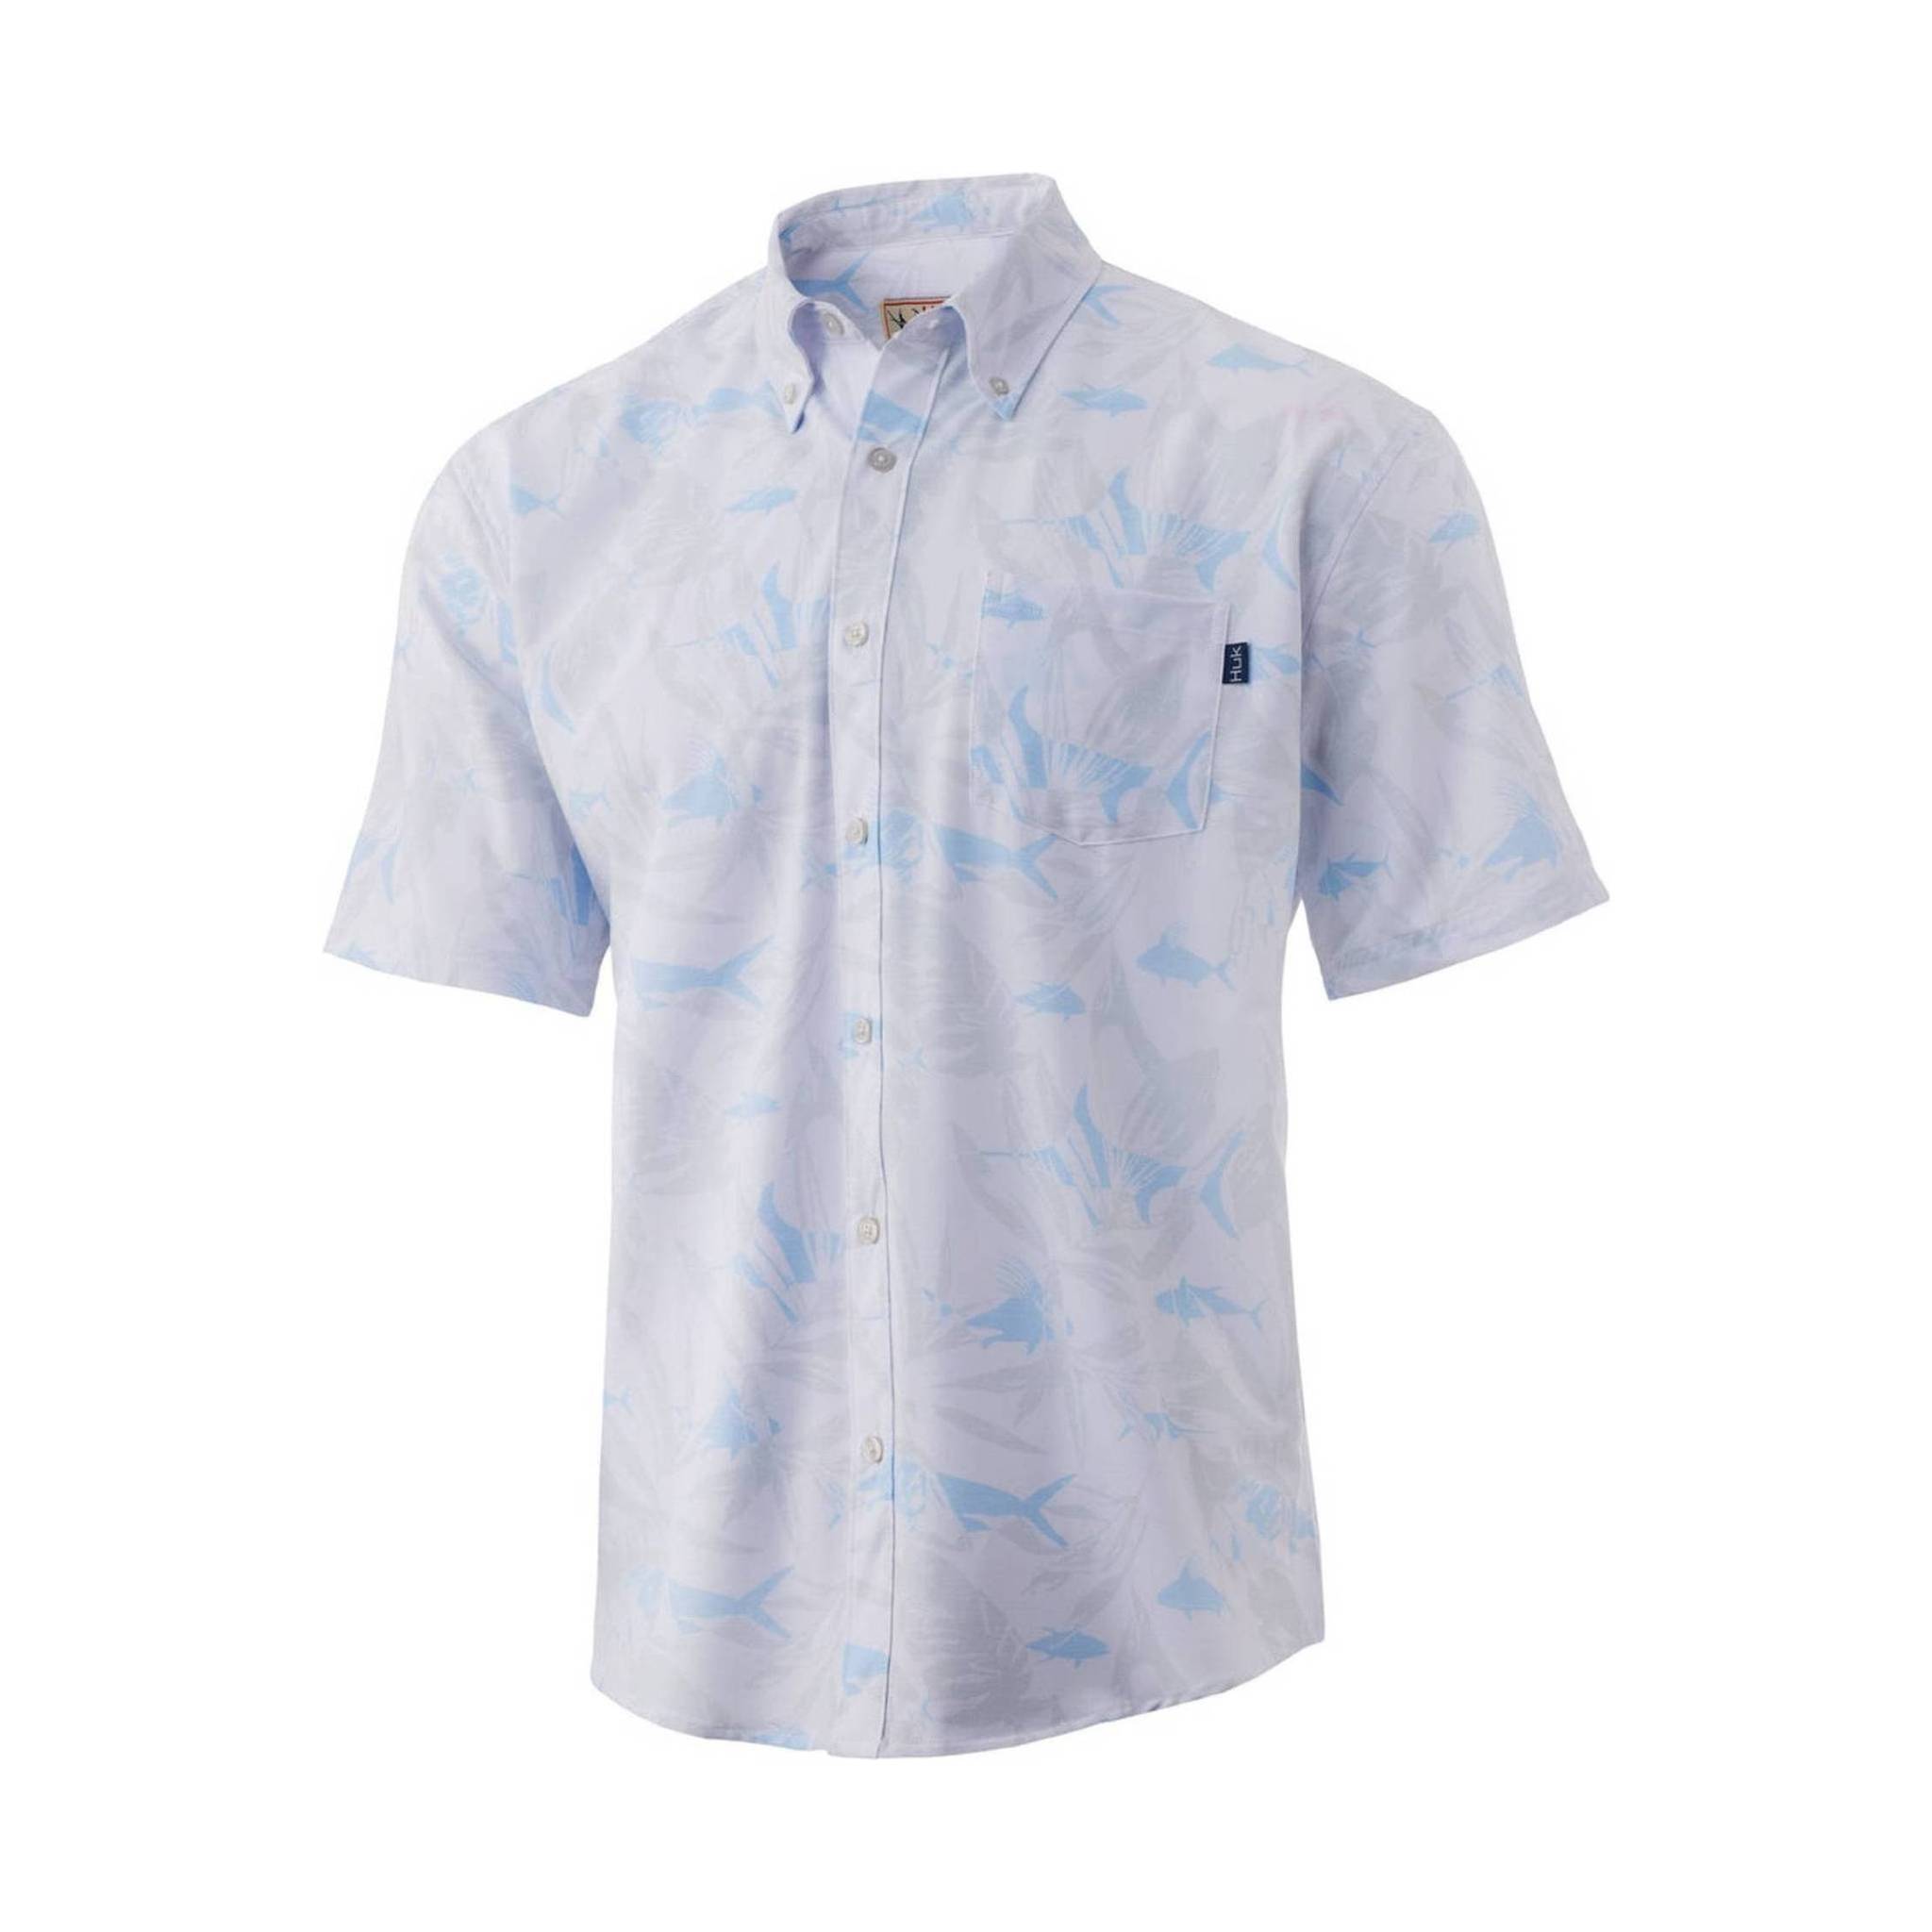 Men's Huk Kona Ocean Palm Button Down Shirt, Large, White